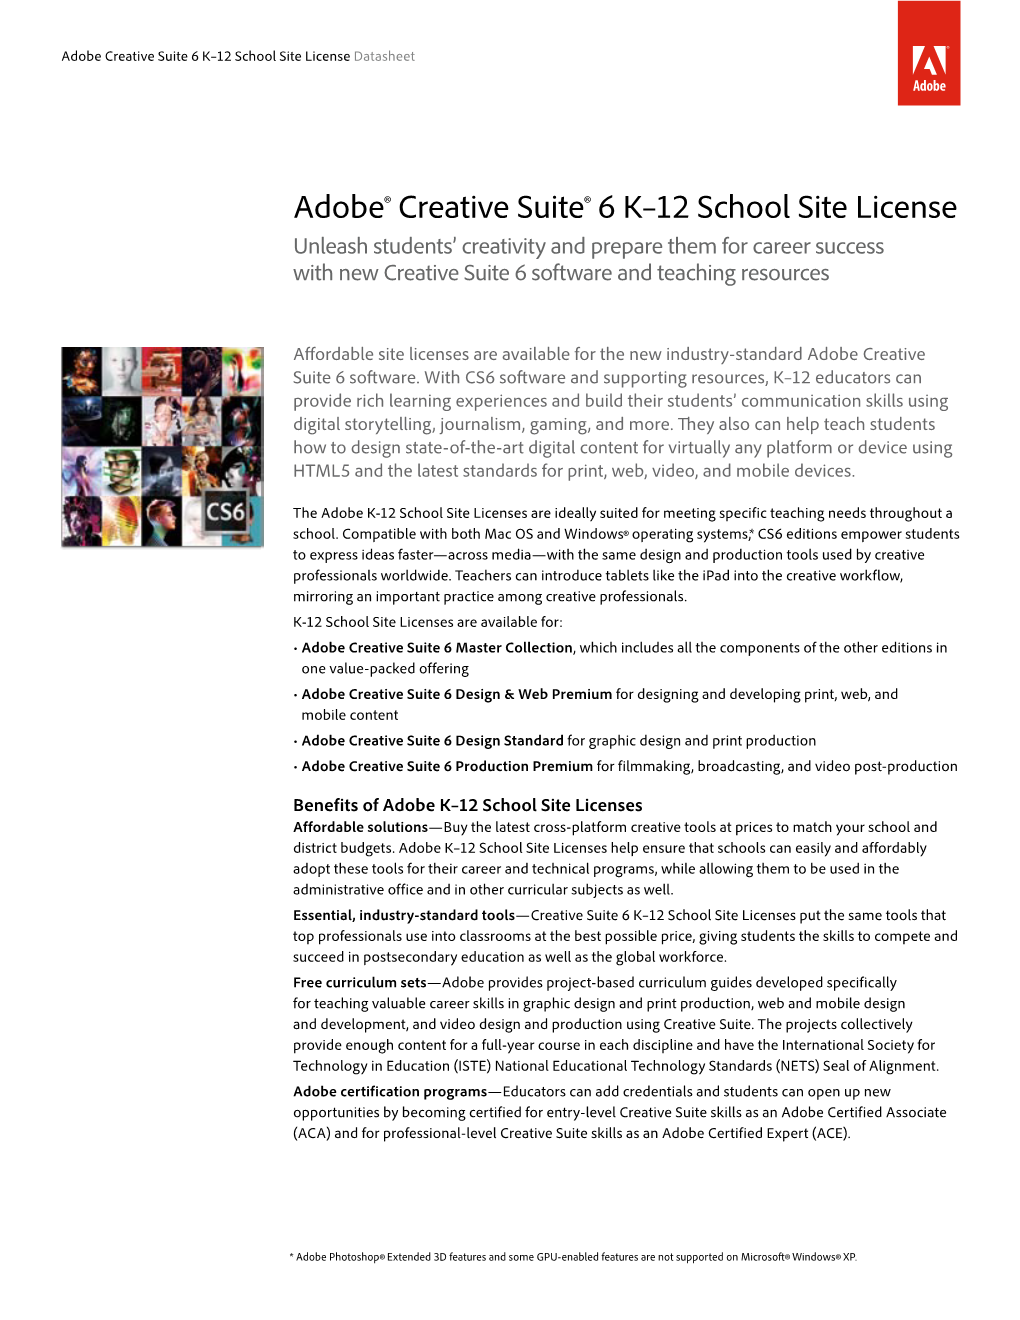 Adobe® Creative Suite® 6 K–12 School Site License